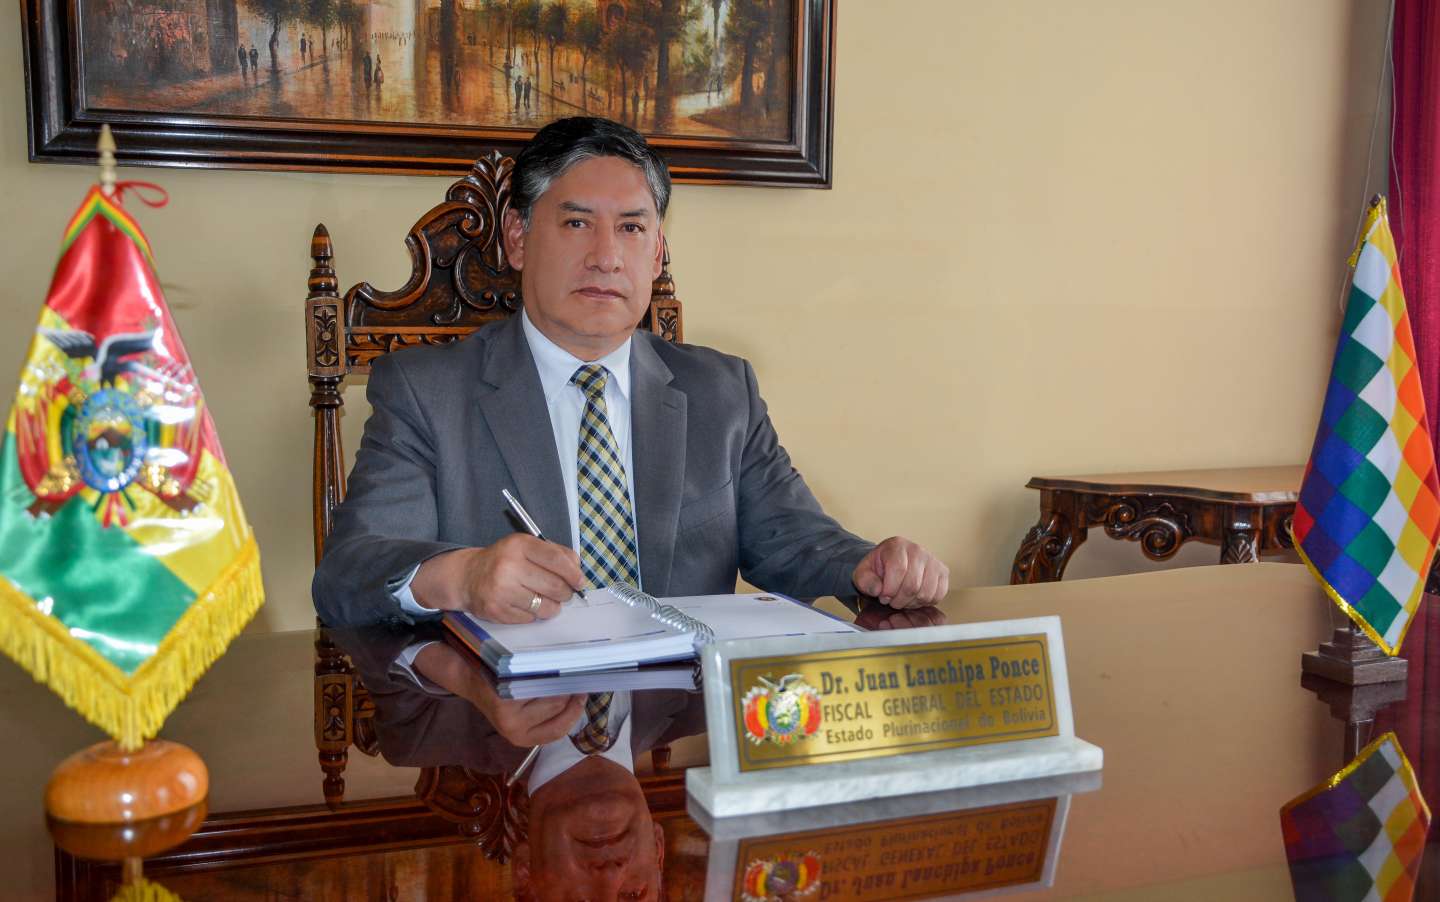 Fausto Juan Lanchipa Ponce - Fiscal General del Estado Plurinacional de Bolivia